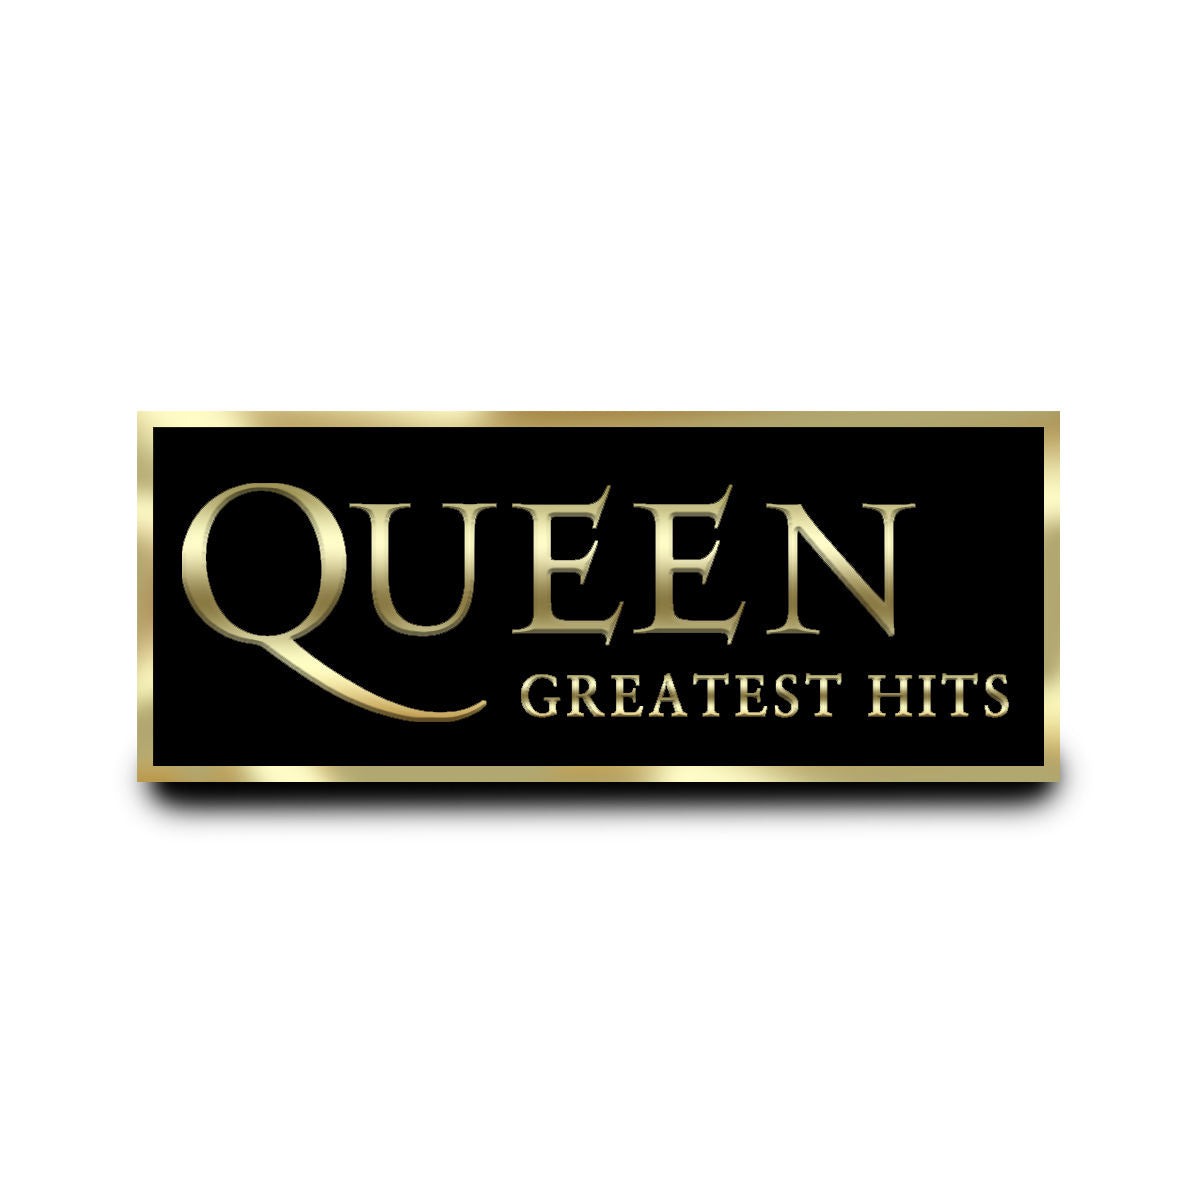 Queen - Collectors Greatest Hits Pin Badge